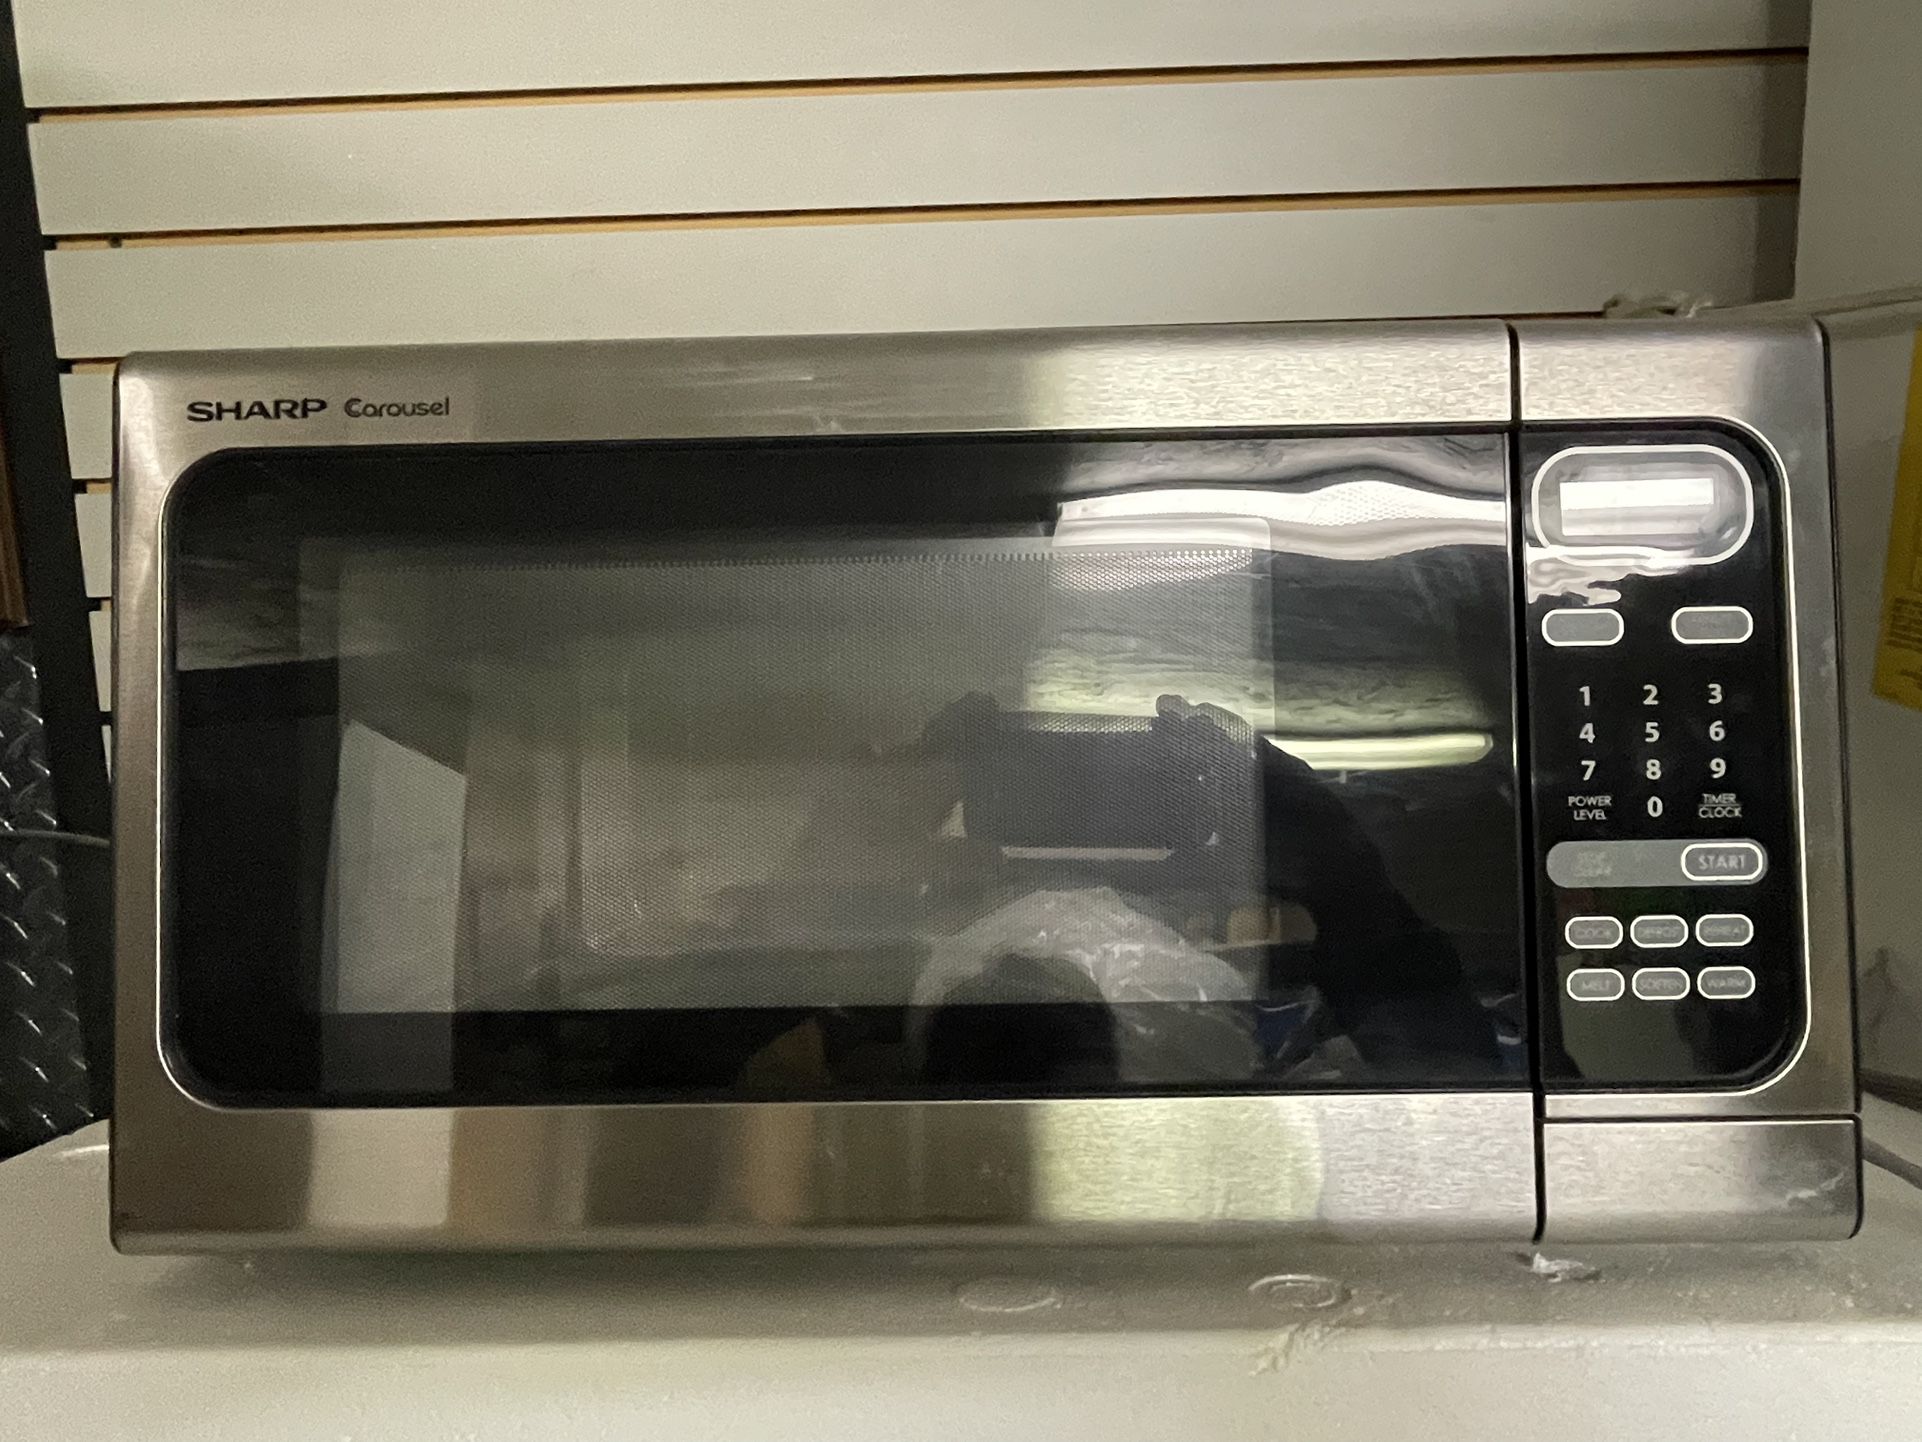 Microwave Oven Sharp $85